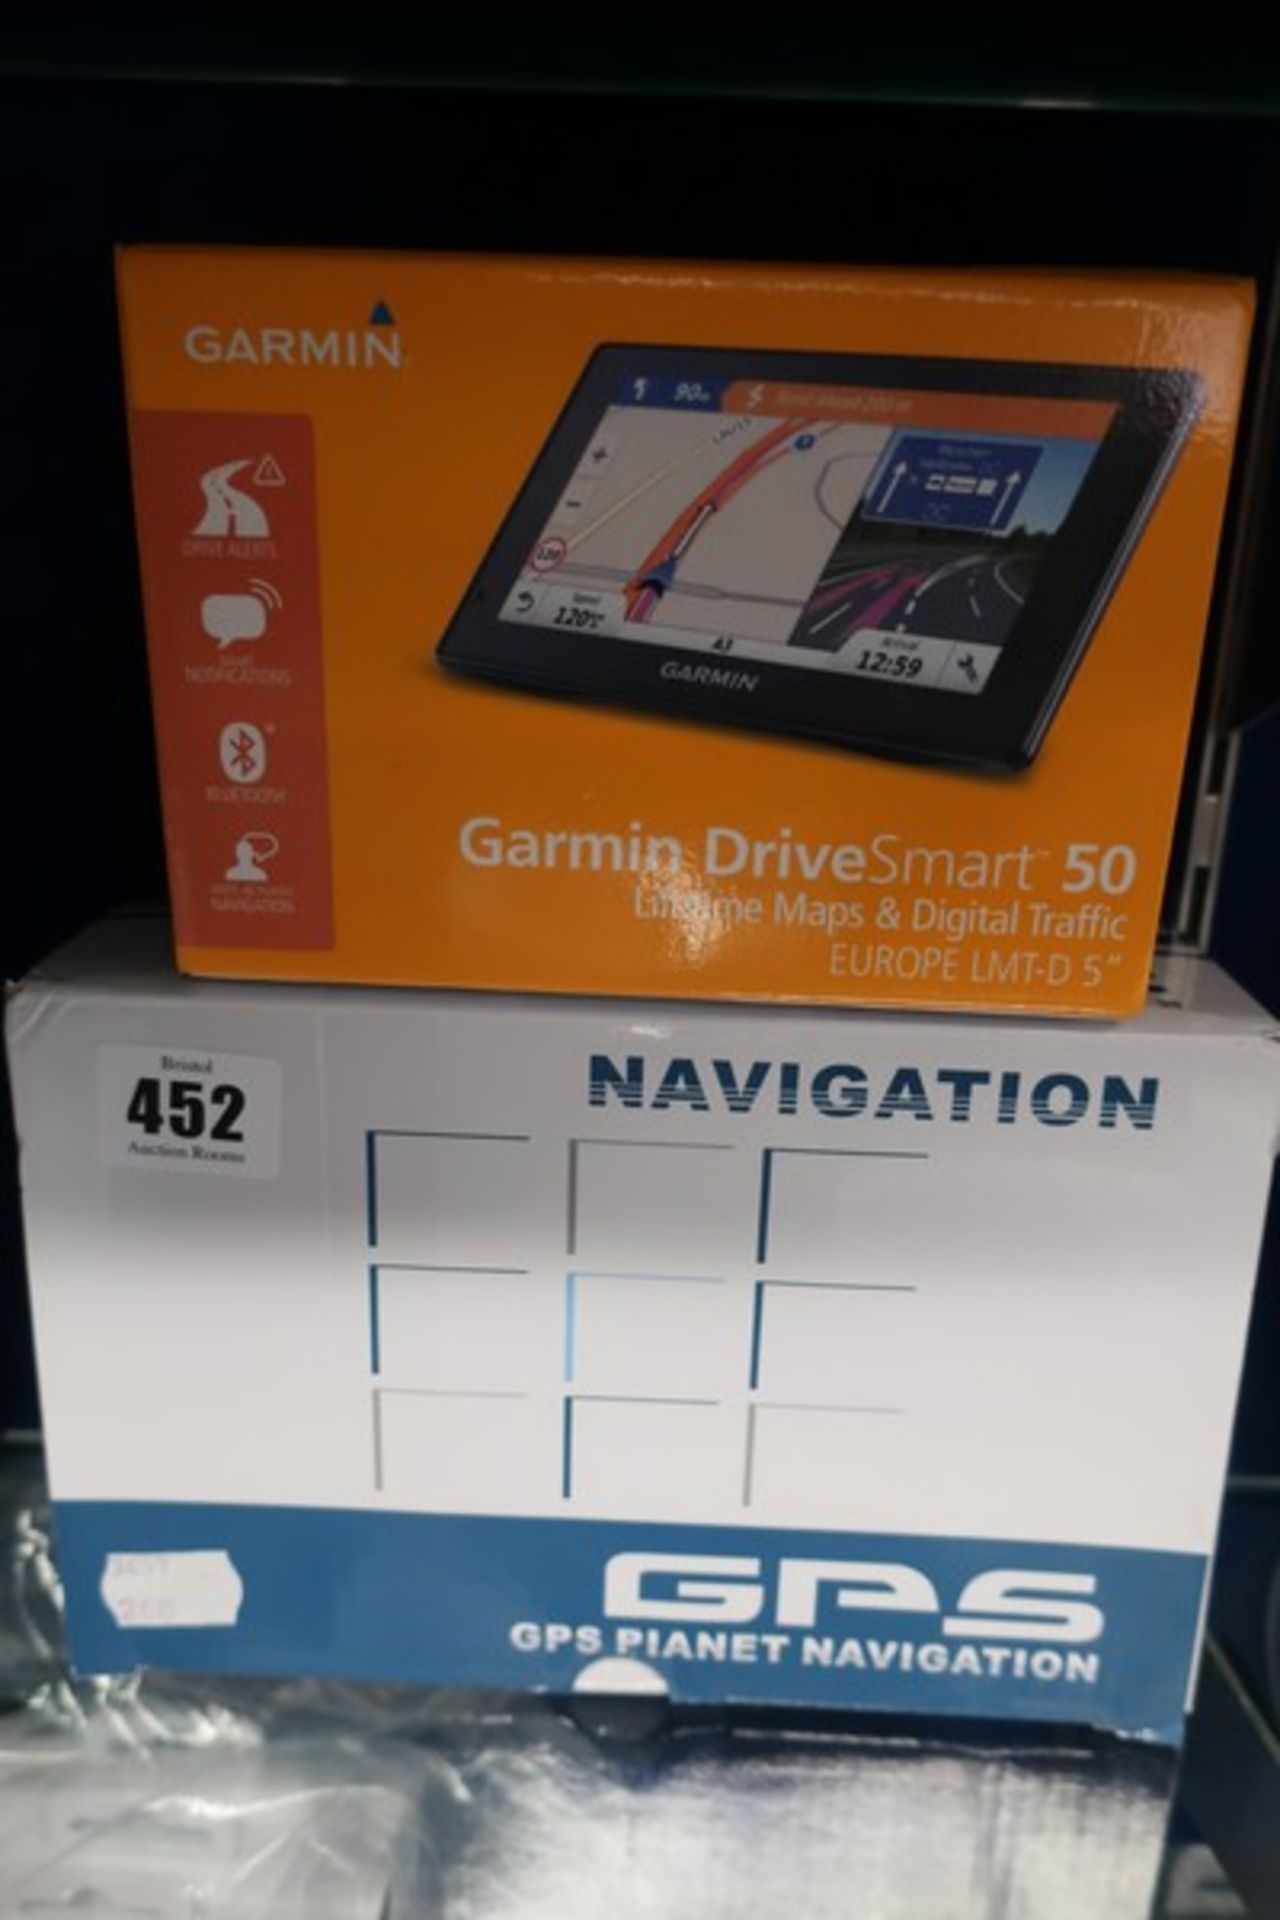 A boxed as new Garmin DriveSmart 50 LMT-D 5" Sat Nav with Full European Lifetime Maps and Traffic